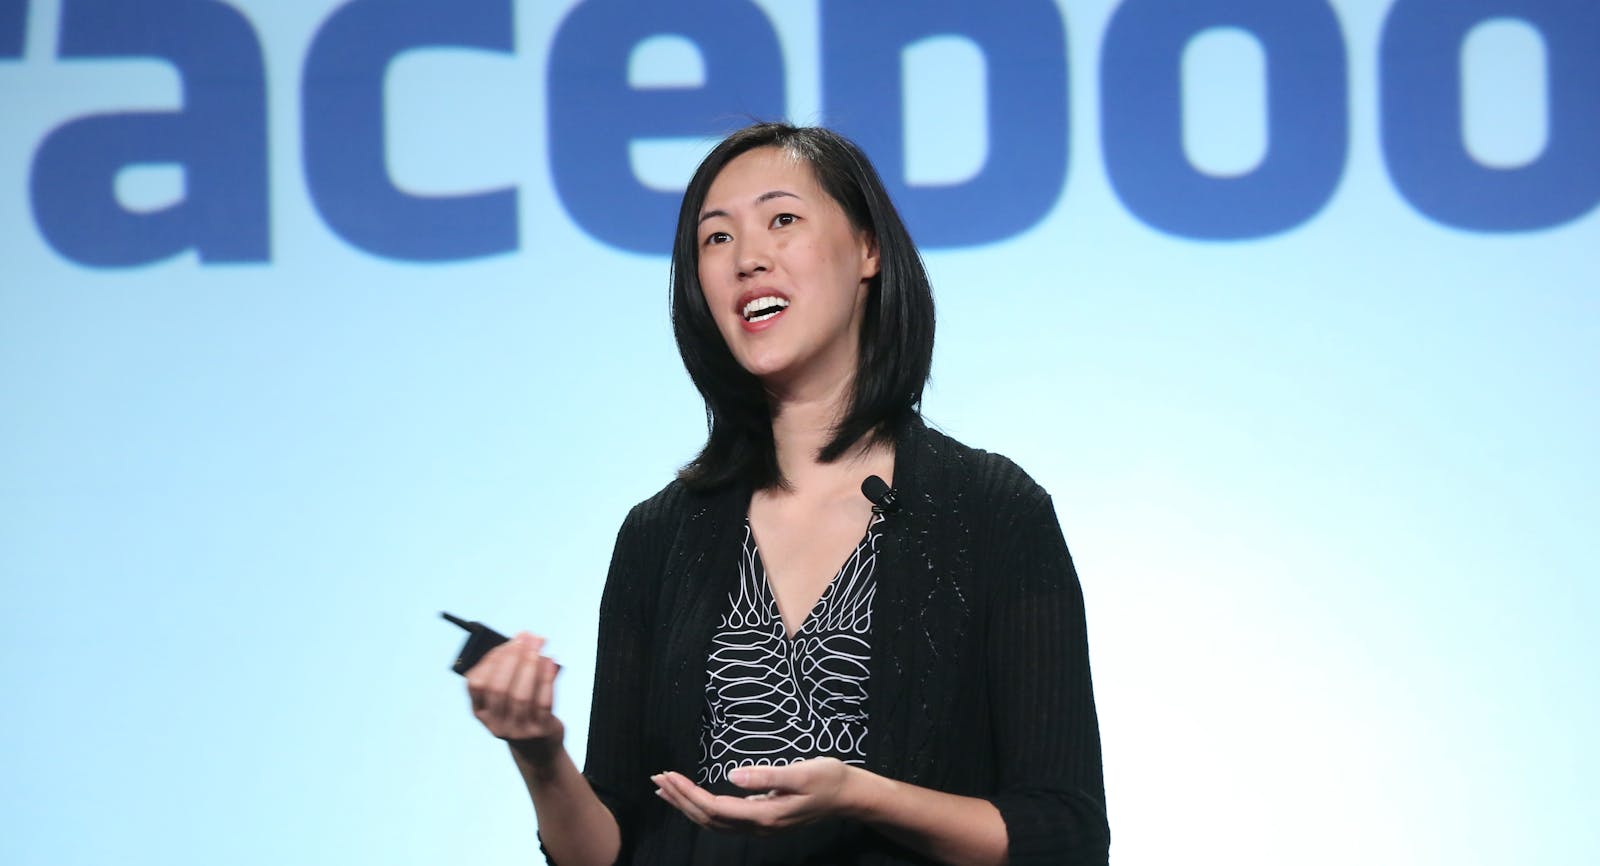 Facebook's Deb Liu speaks at this year's Money 2020 conference in Las Vegas. Source: Facebook.